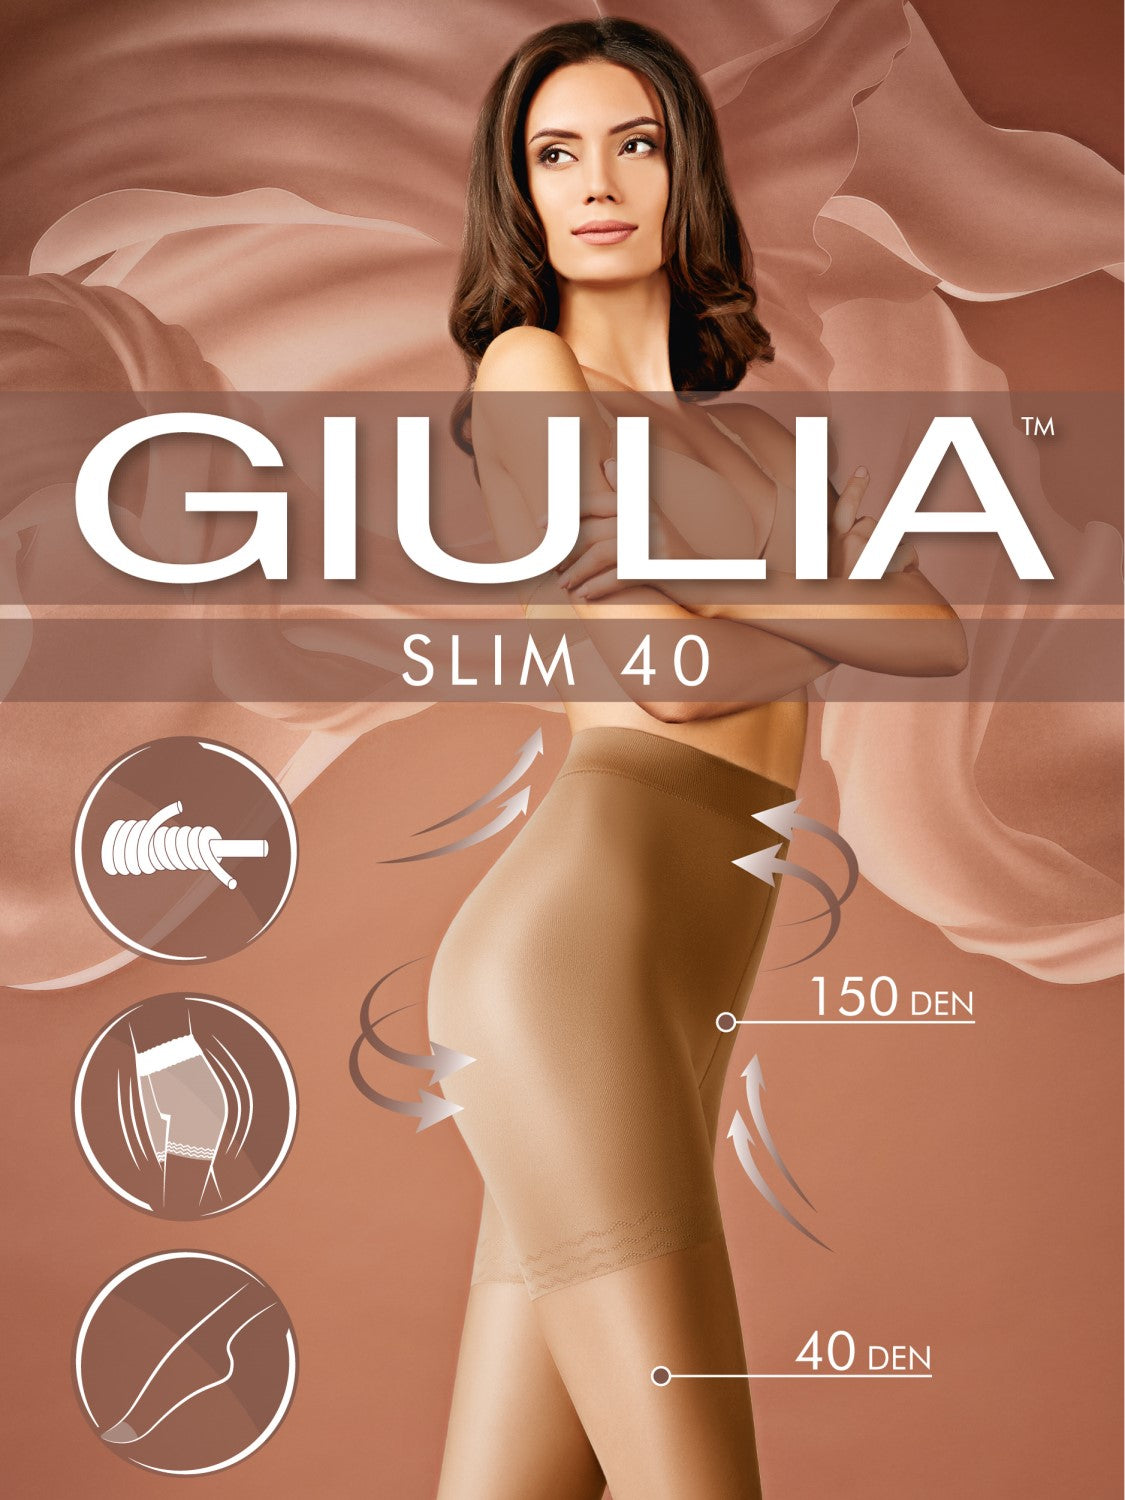 Giulia Slim 40 slimming stocking - Hosetess best compression stockings free download